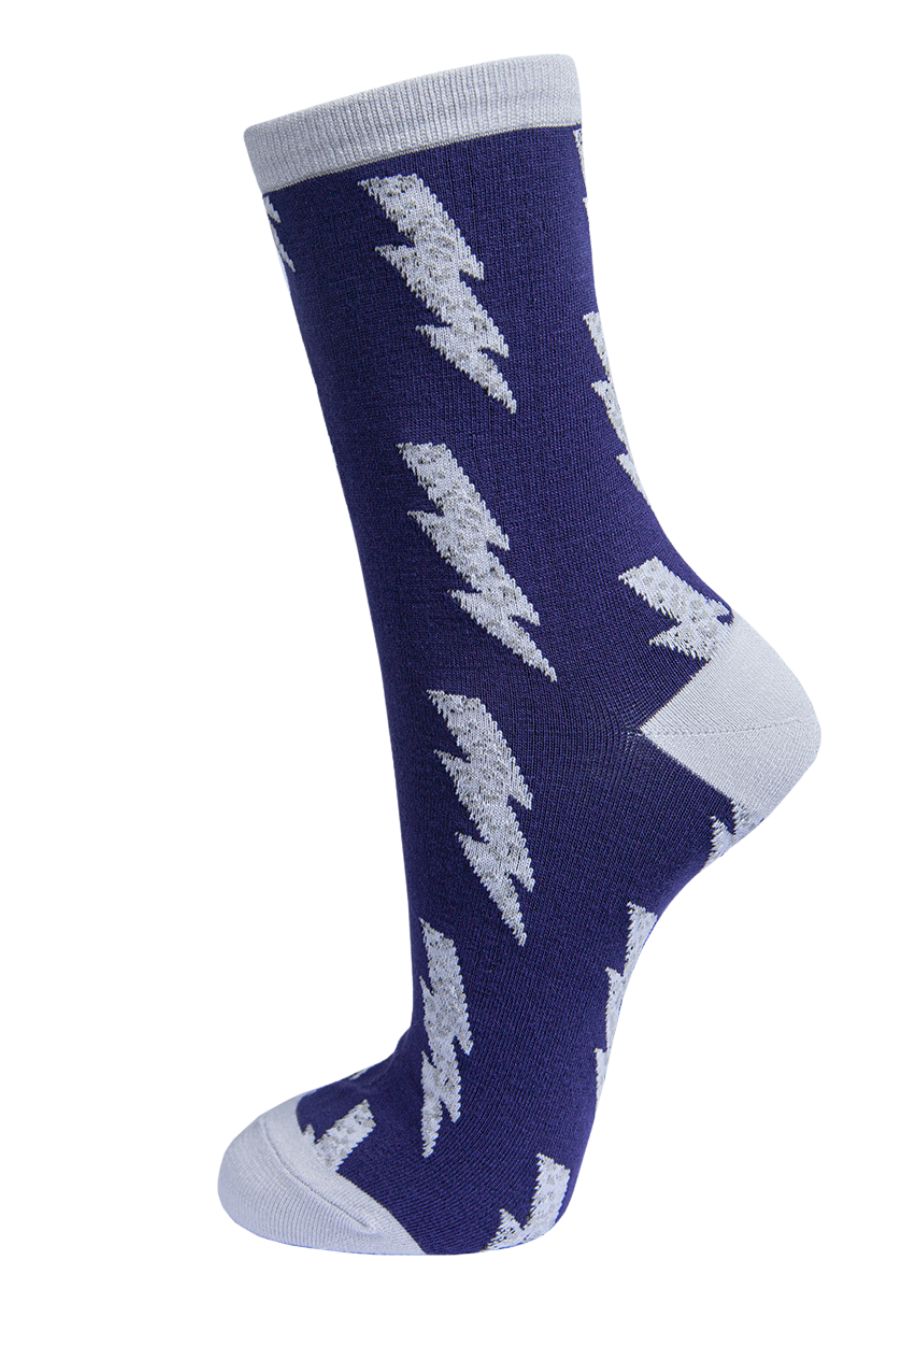 navy blue, grey ankle socks with a leopard print lighting bolt pattern